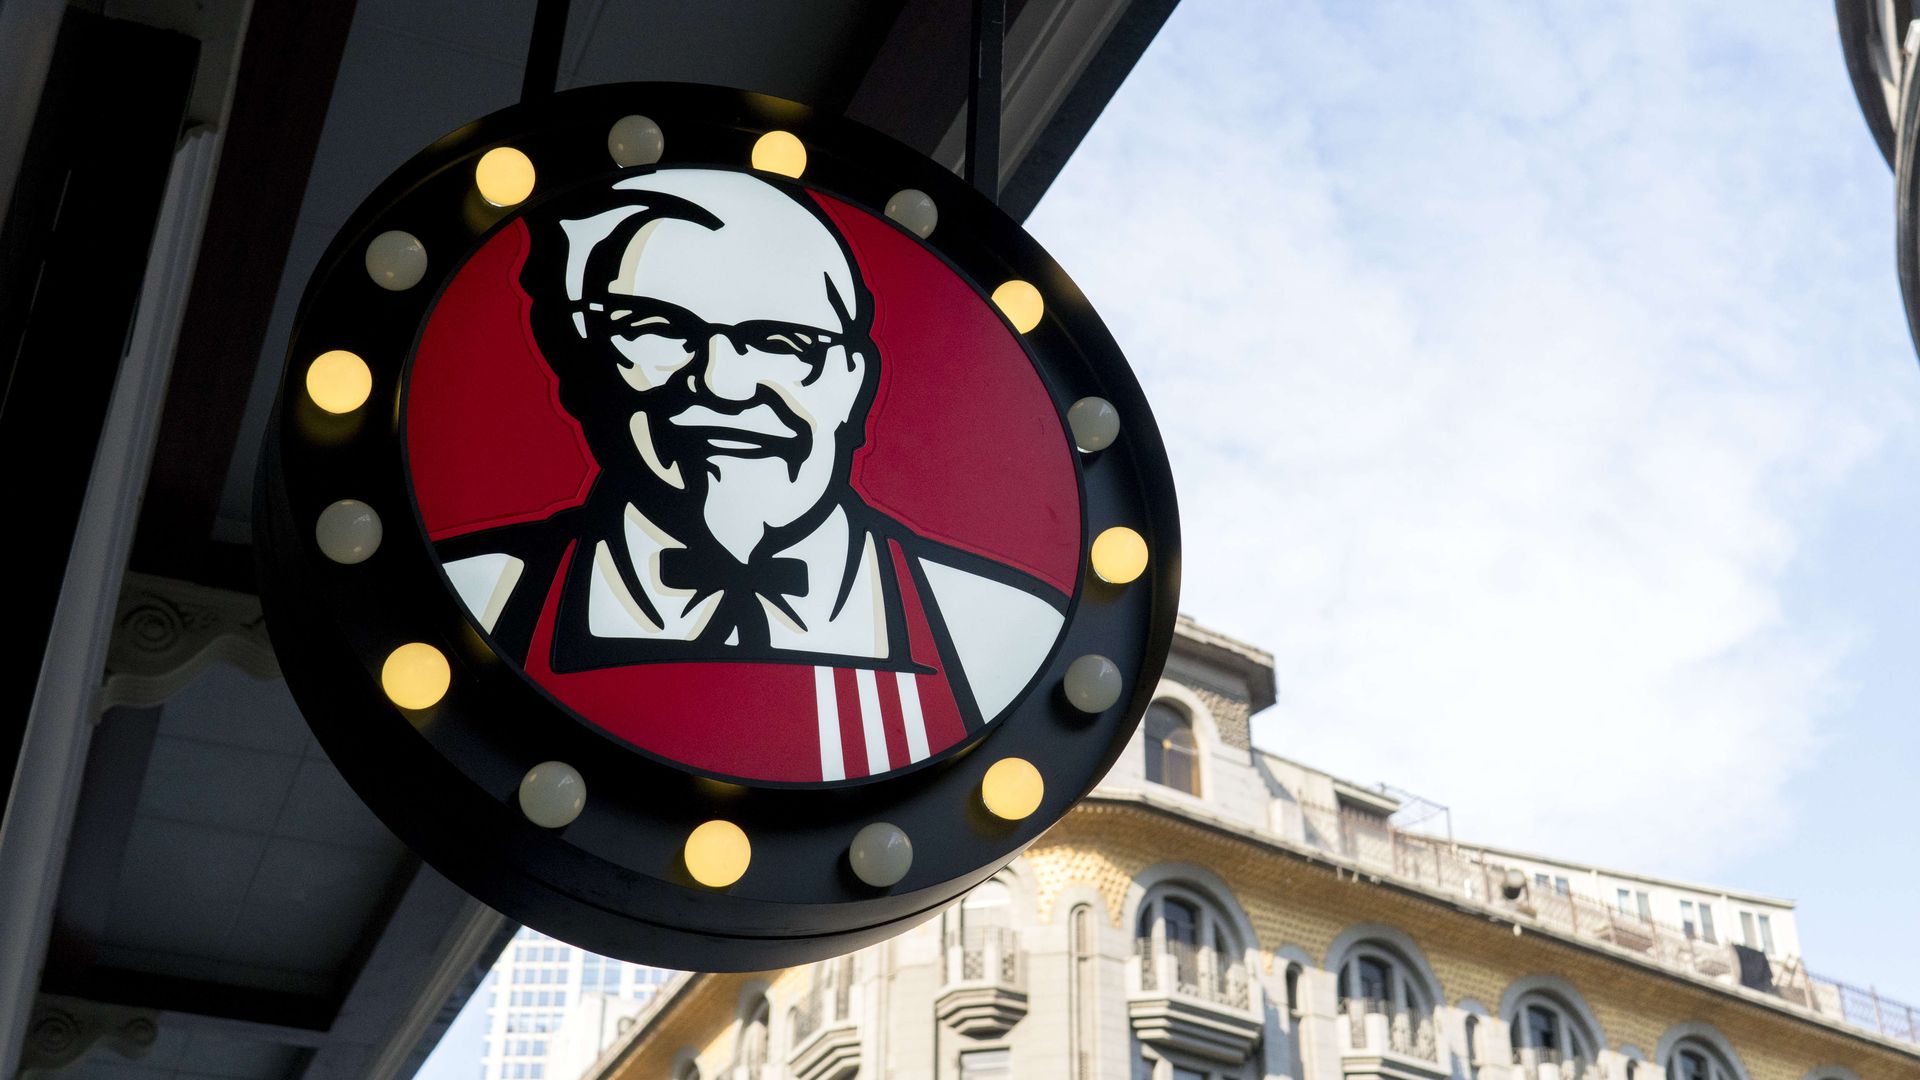 Colonel Sanders portrait on logo of a KFC restaurant.